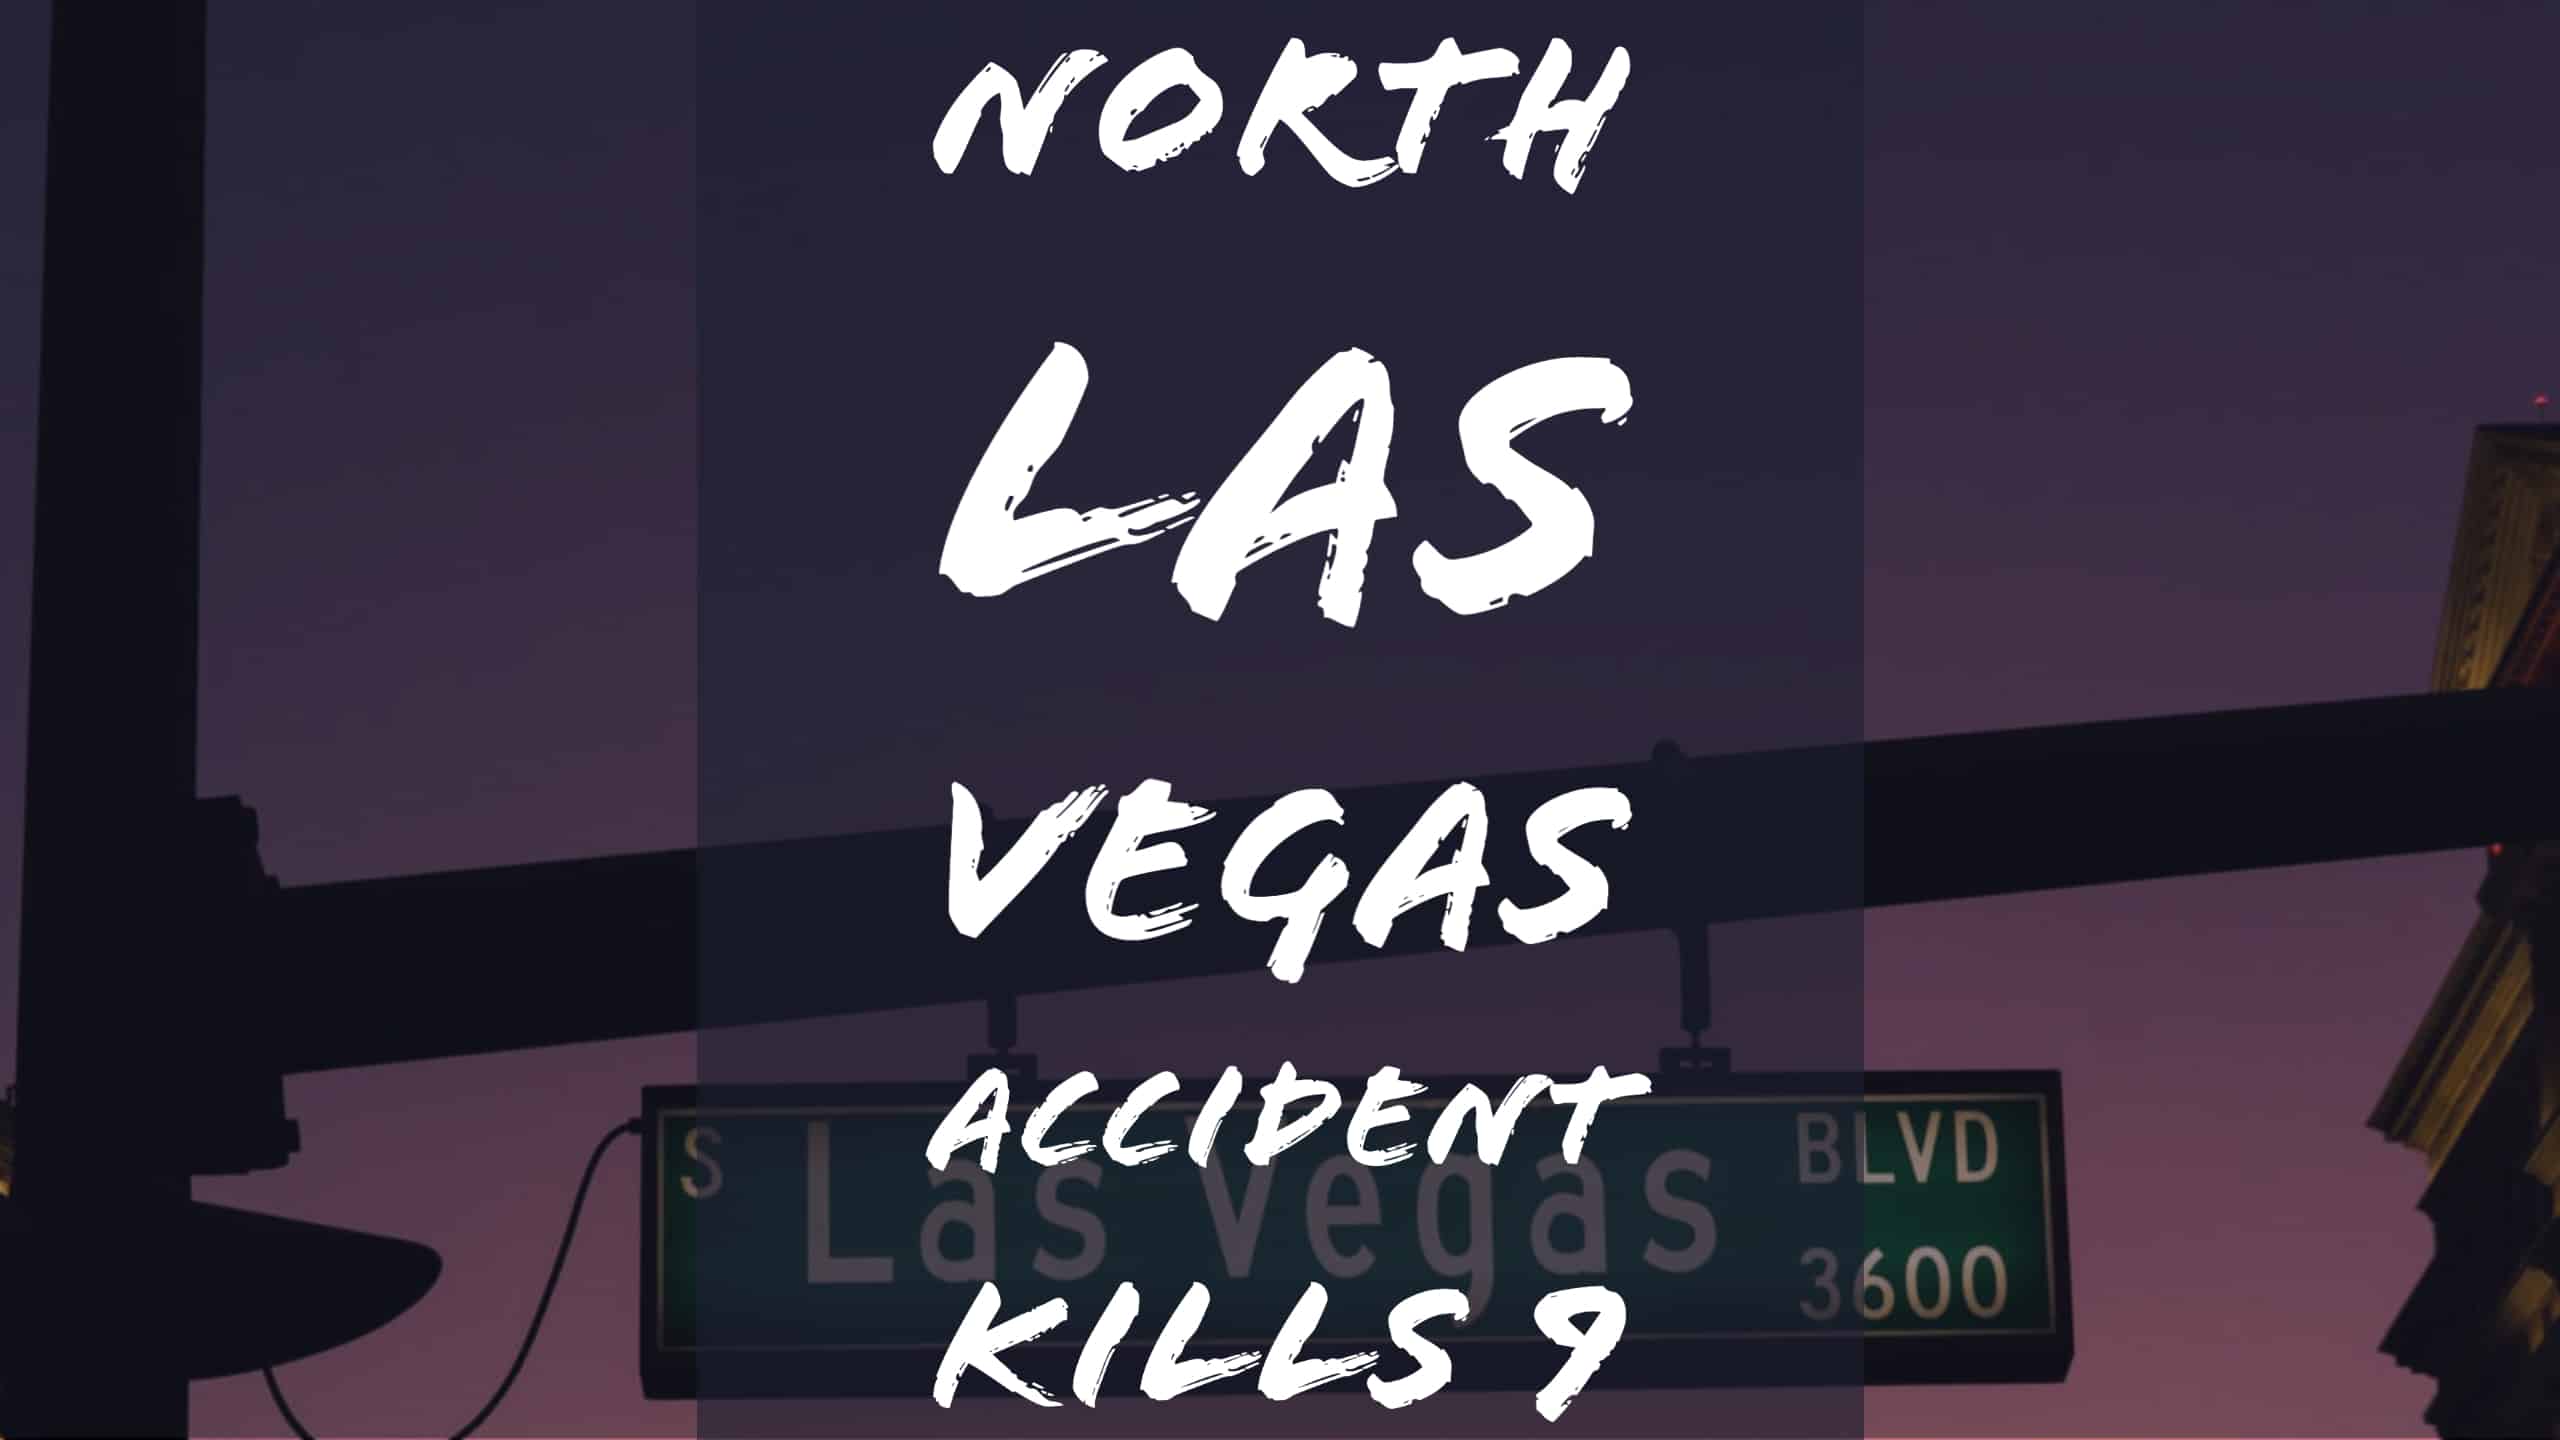 Las Vegas Accident Kills 9